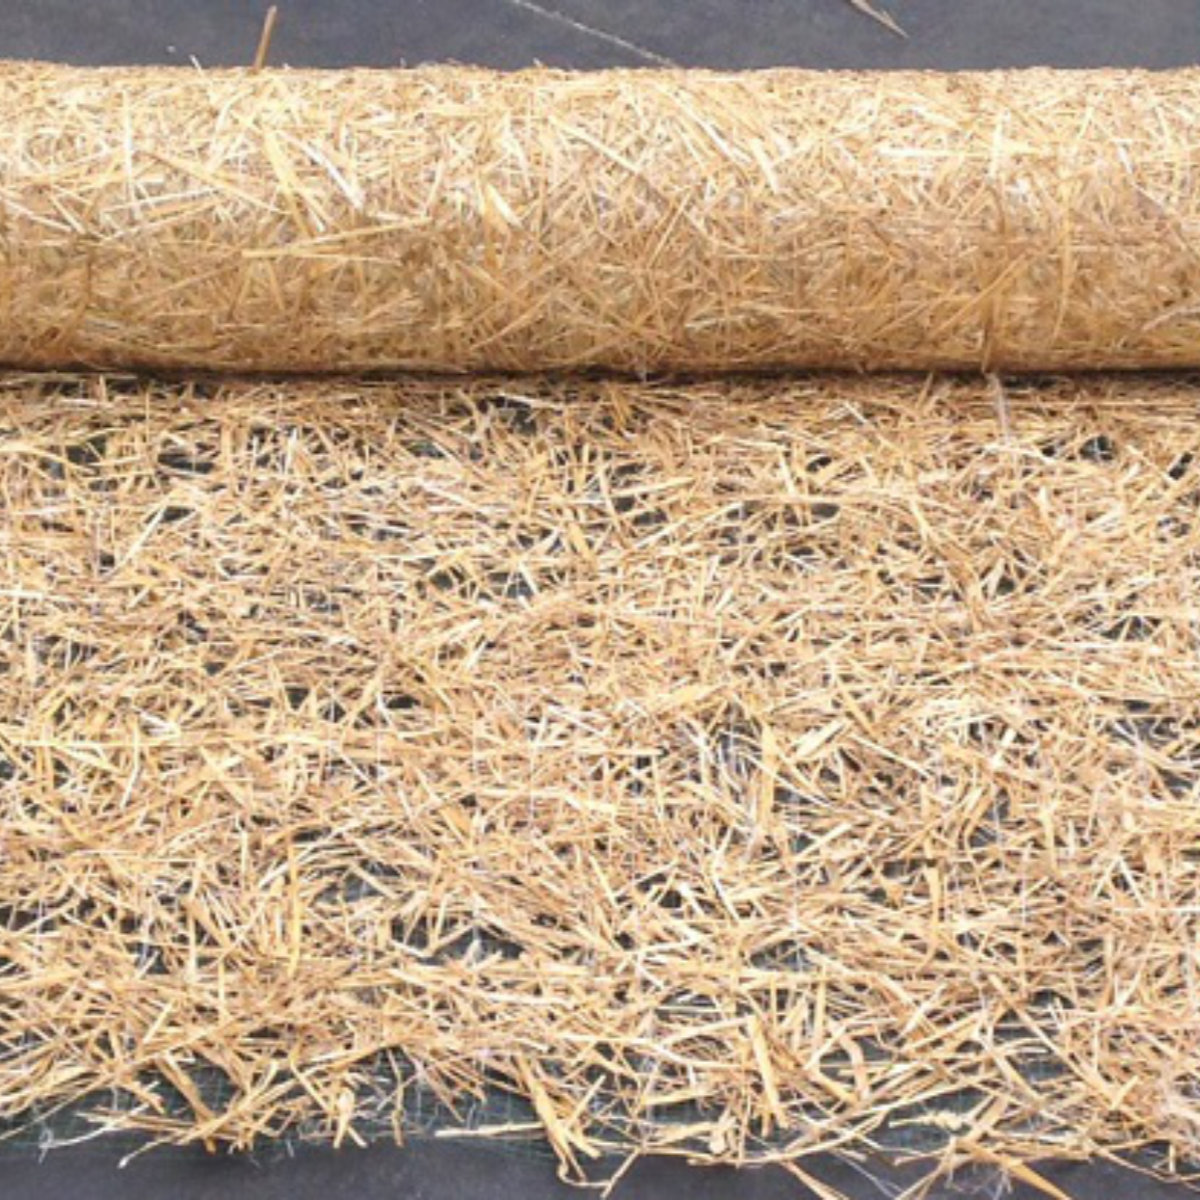 straw blanket